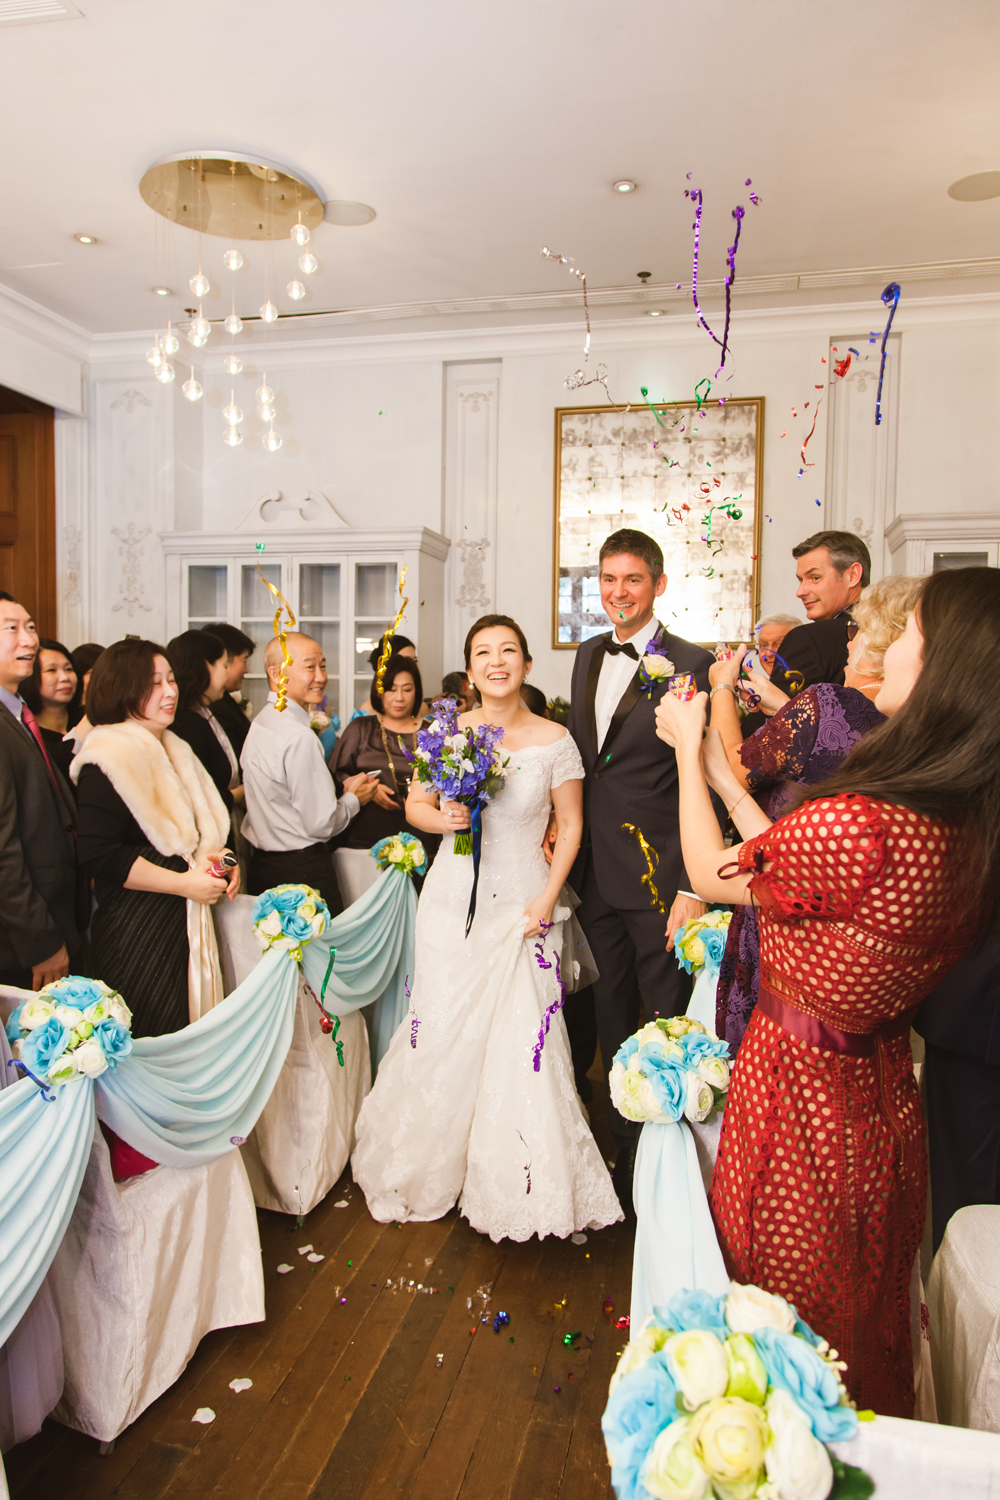 Wedding ceremony at Hullett House